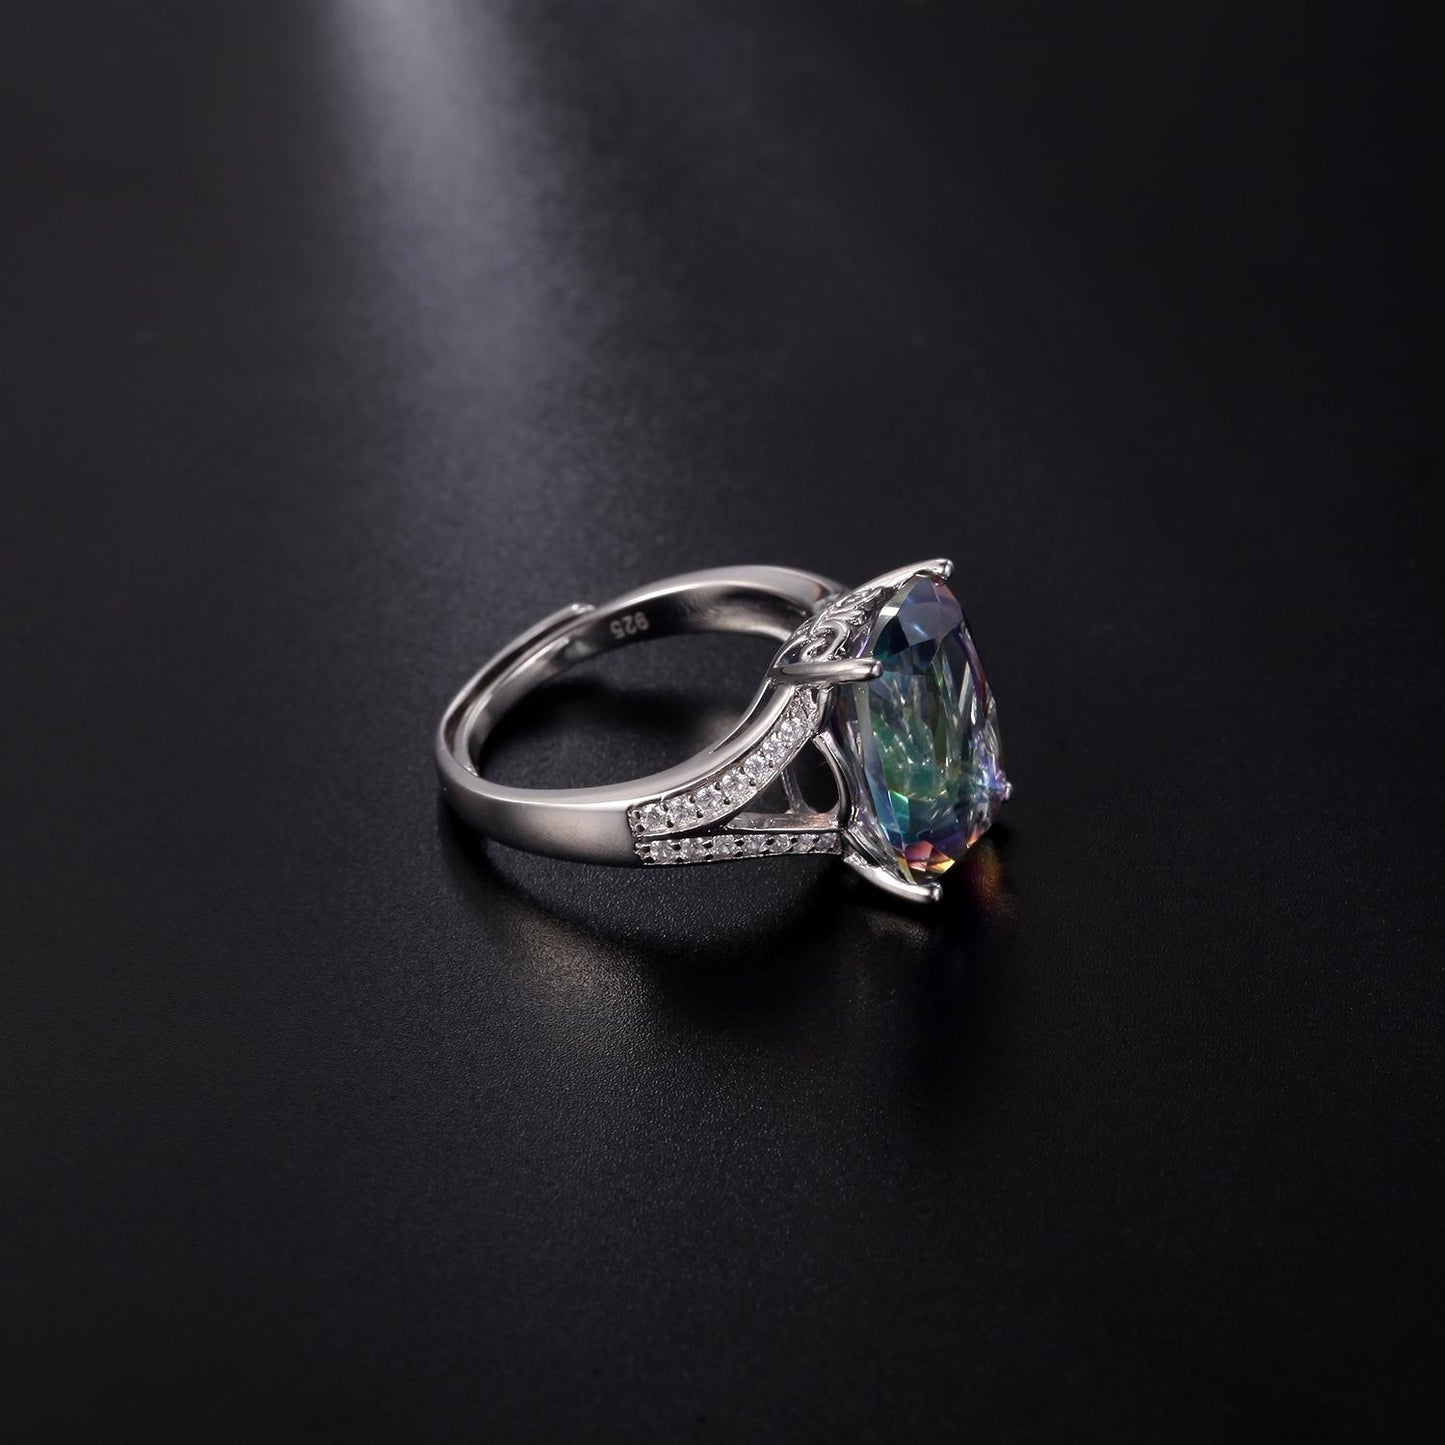 GEM 9.66Ct Mystic Rainbow Topaz Ring in Sterling Silver